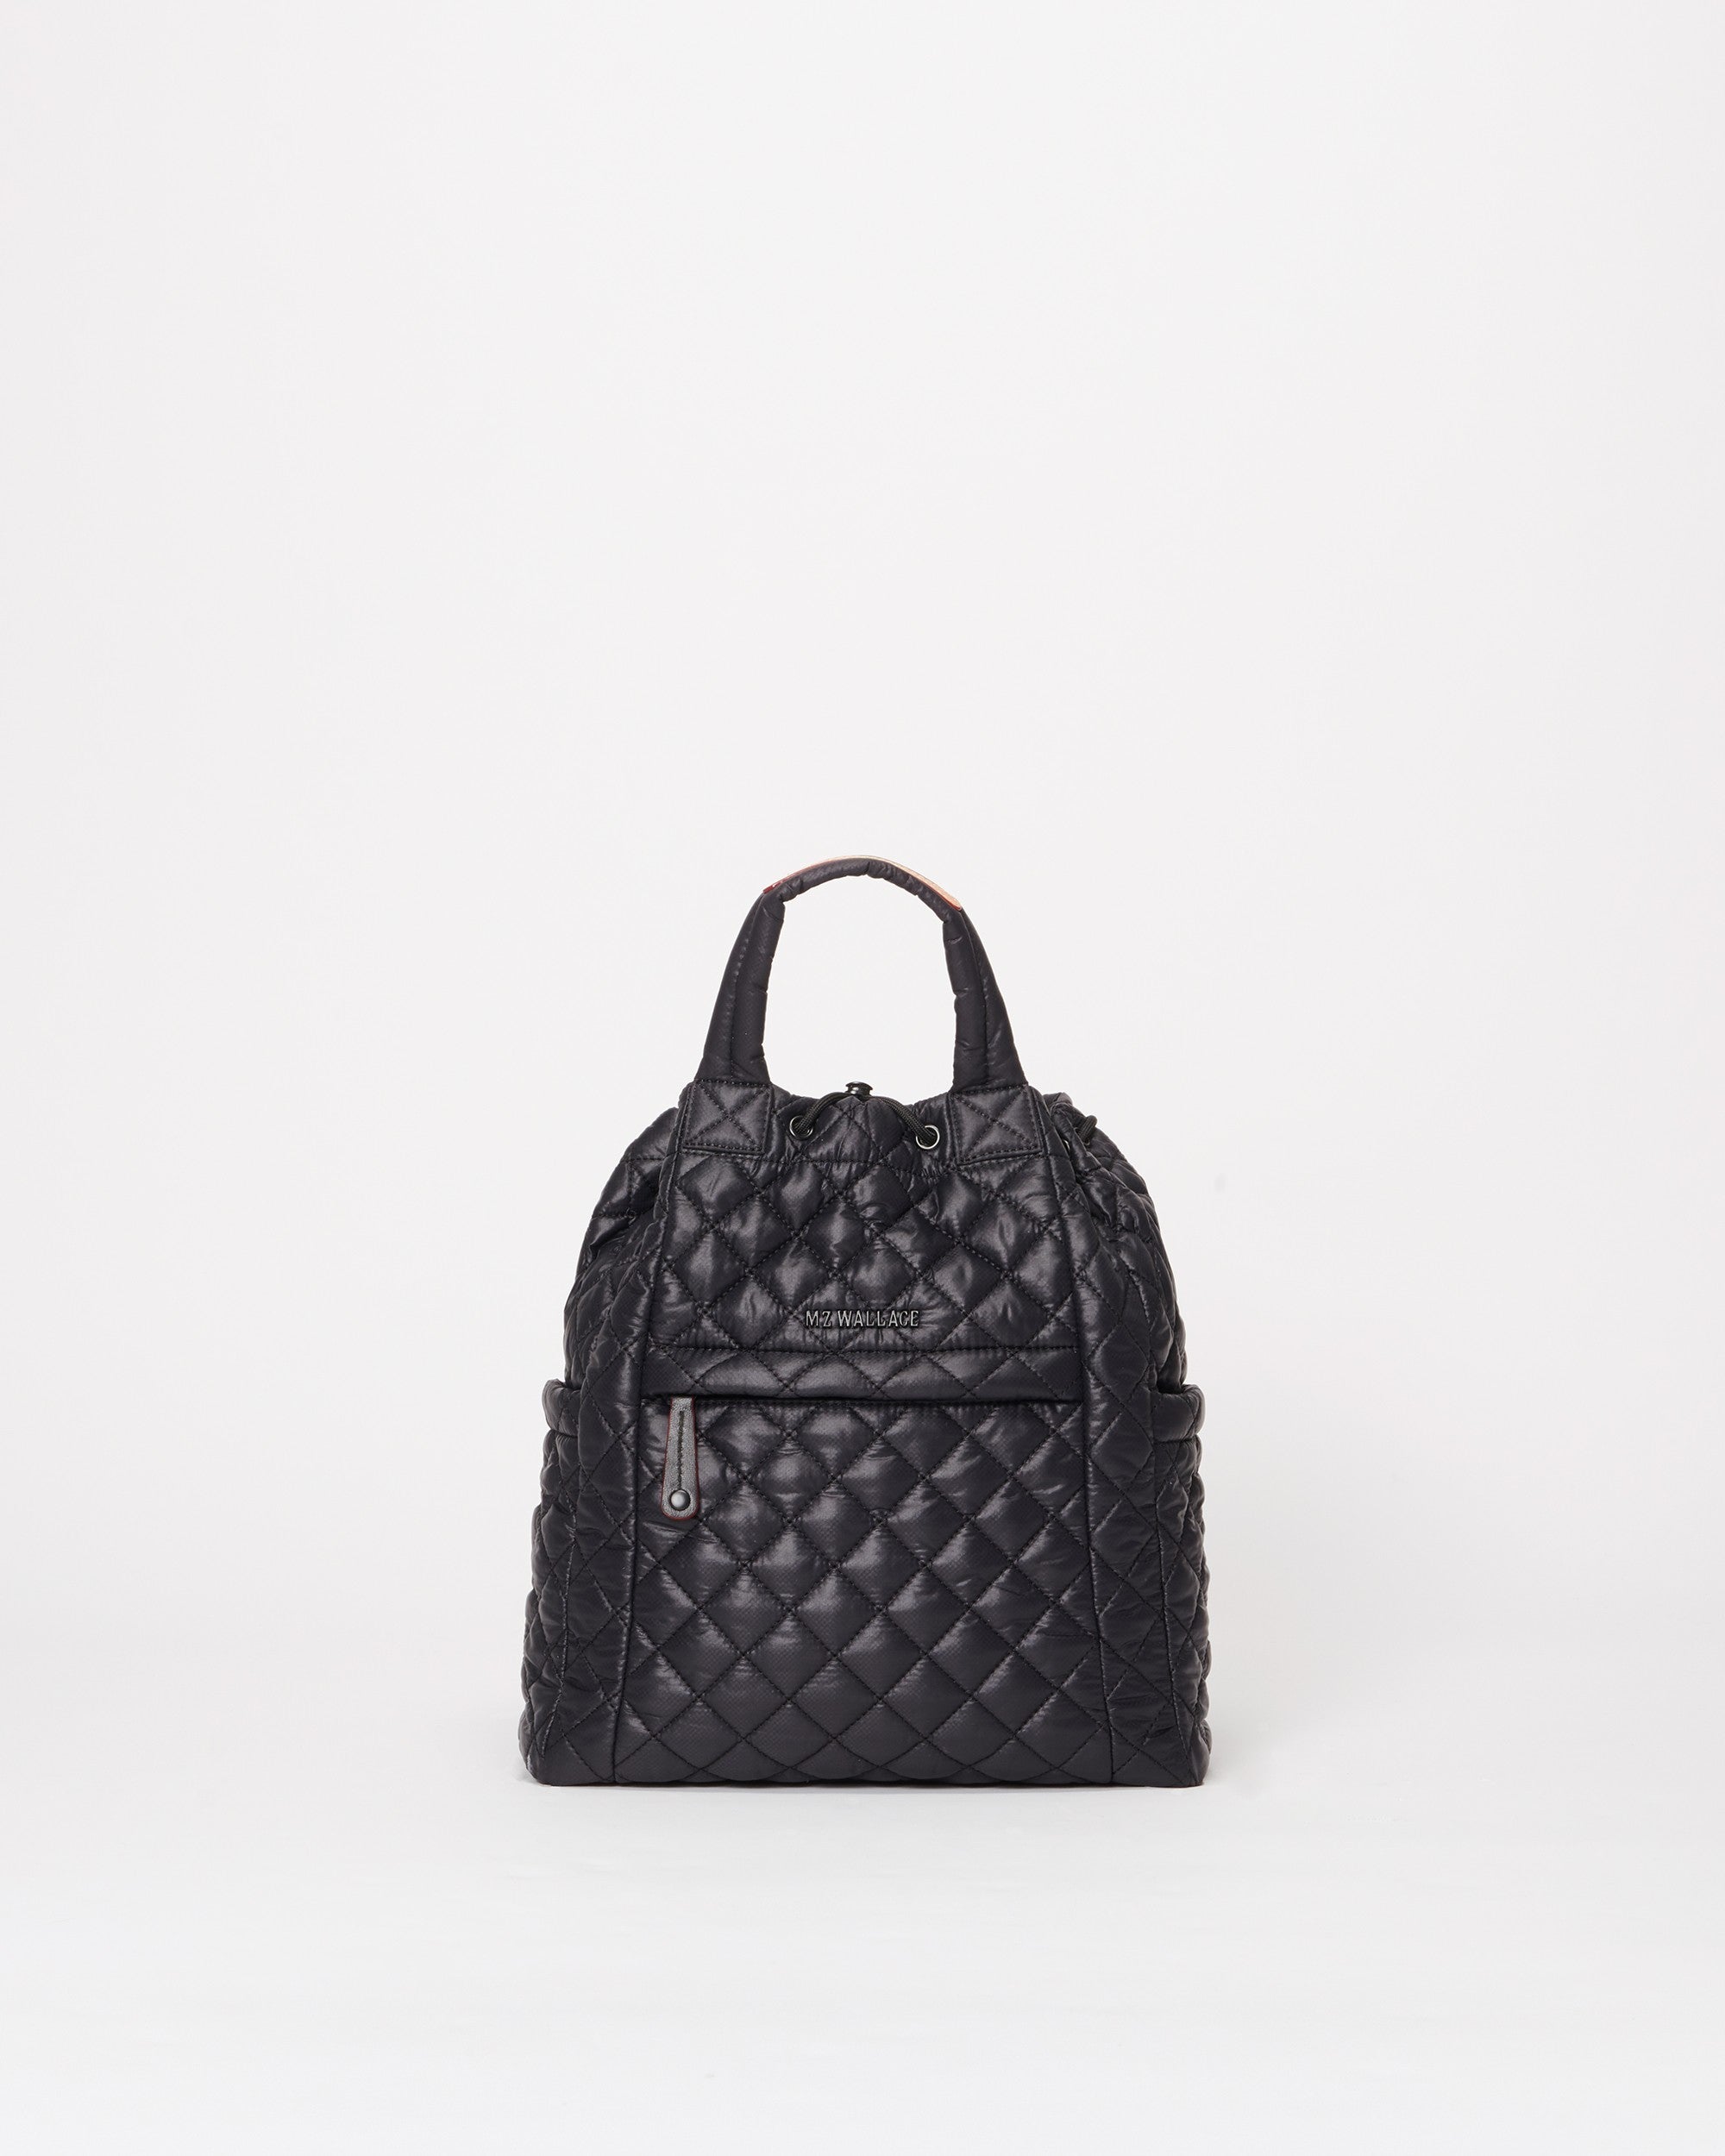 Louis Vuitton Zipped Tote Backpack Rucksack Tote Bag(Black)